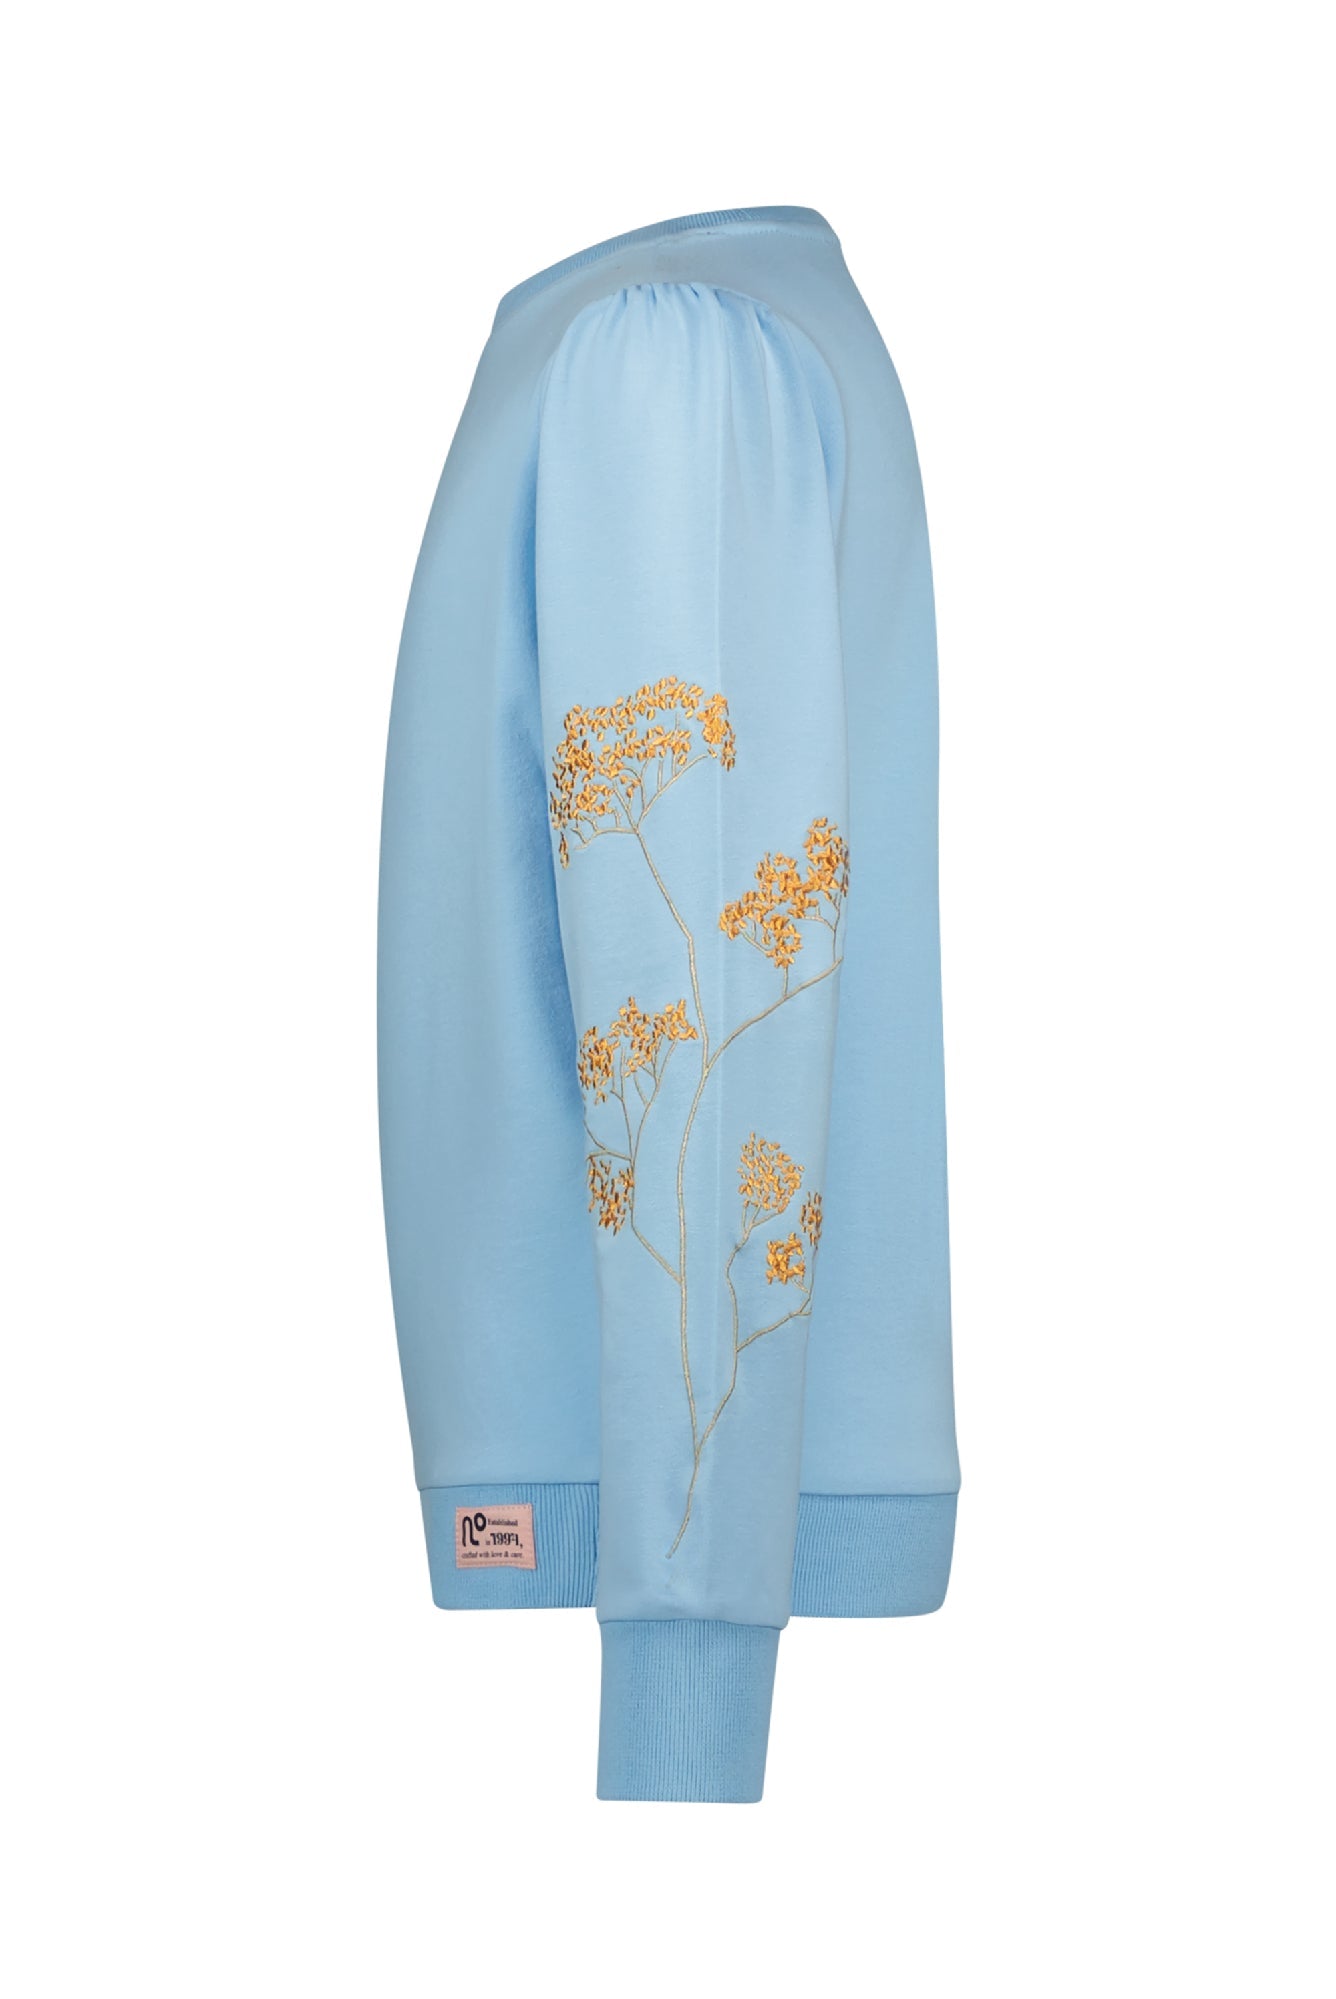 Meisjes Kate round neck sweater with big embroidery at sleeves van NoNo in de kleur Sky High in maat 134-140.